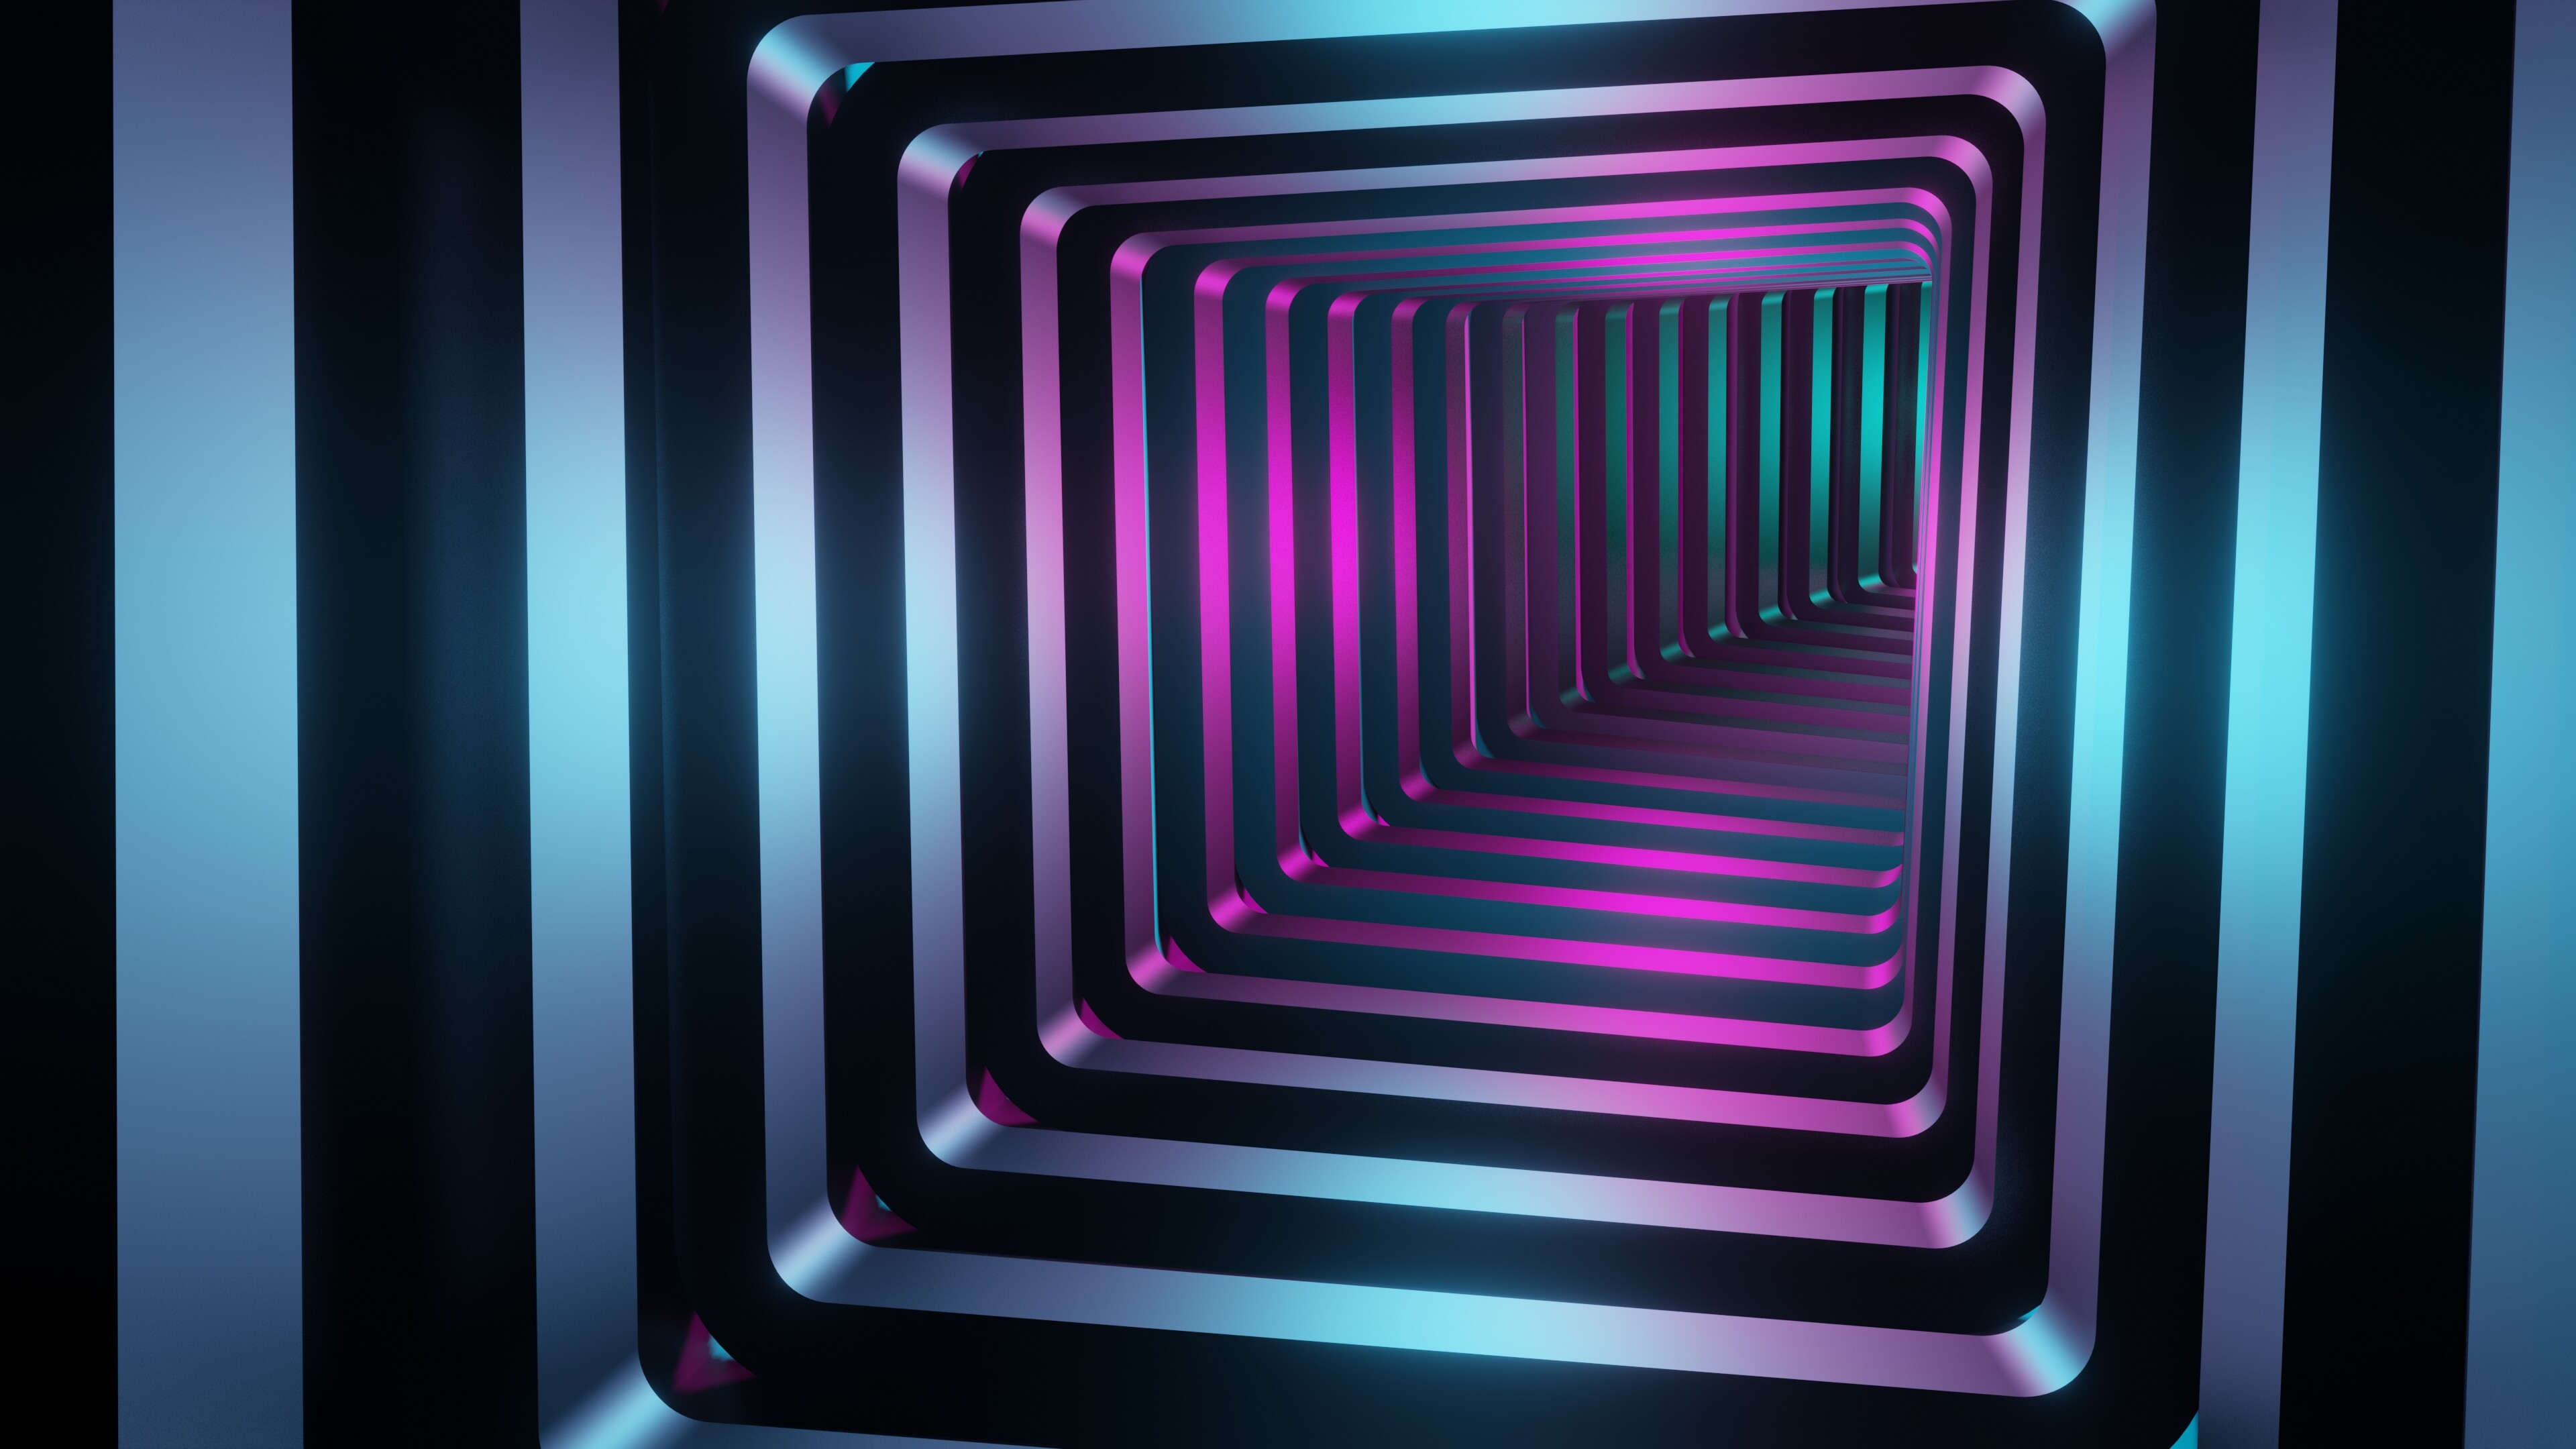 Glow in the Dark: Rectangle tunnel, Neon lighting, Infinity, Squares. 3840x2160 4K Wallpaper.